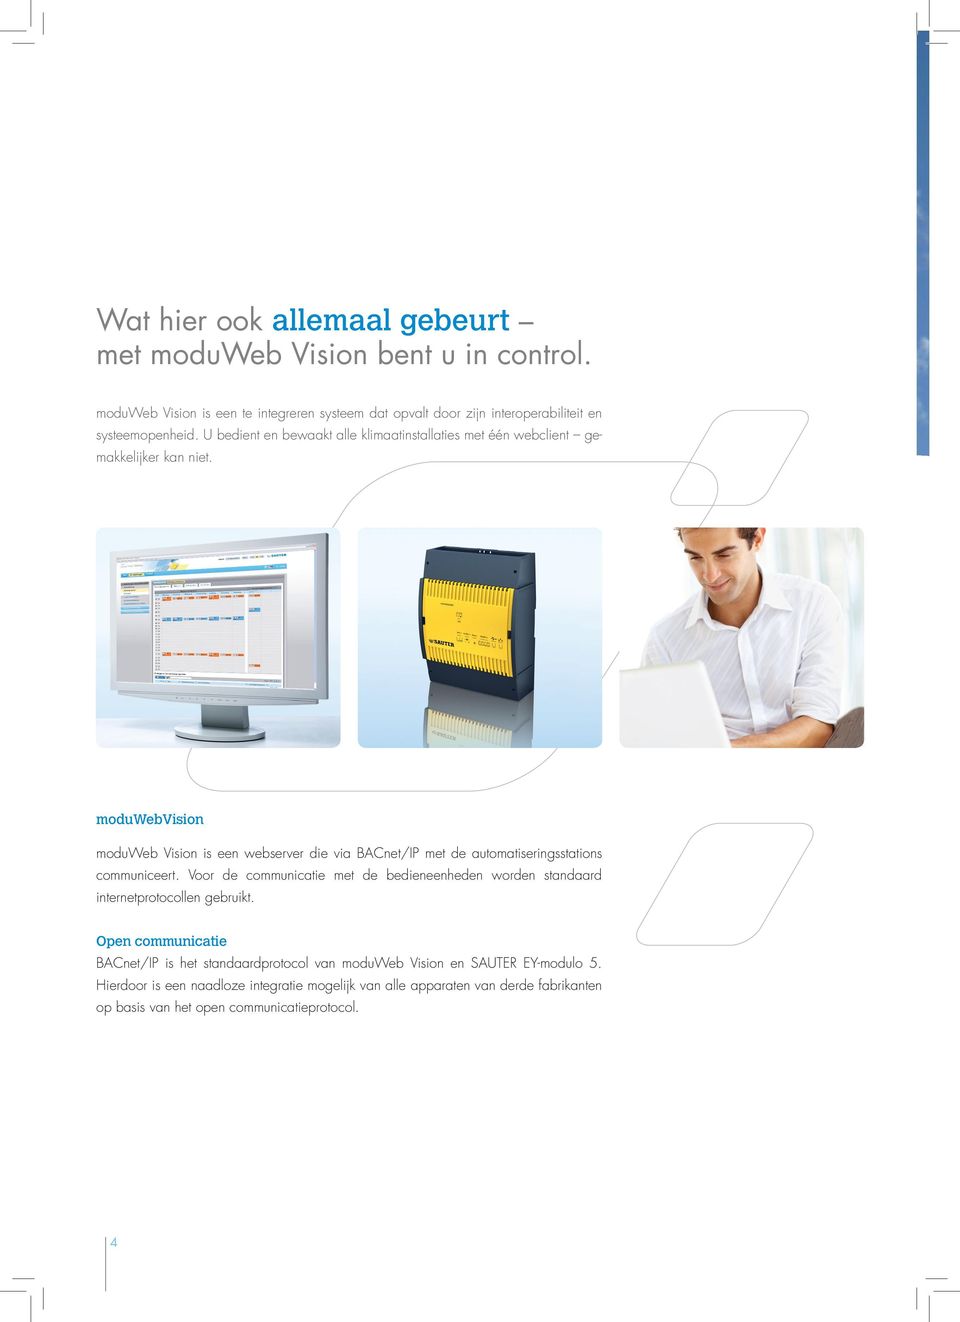 moduwebvision moduweb Vision is een webserver die via BACnet/IP met de automatiseringsstations communiceert.